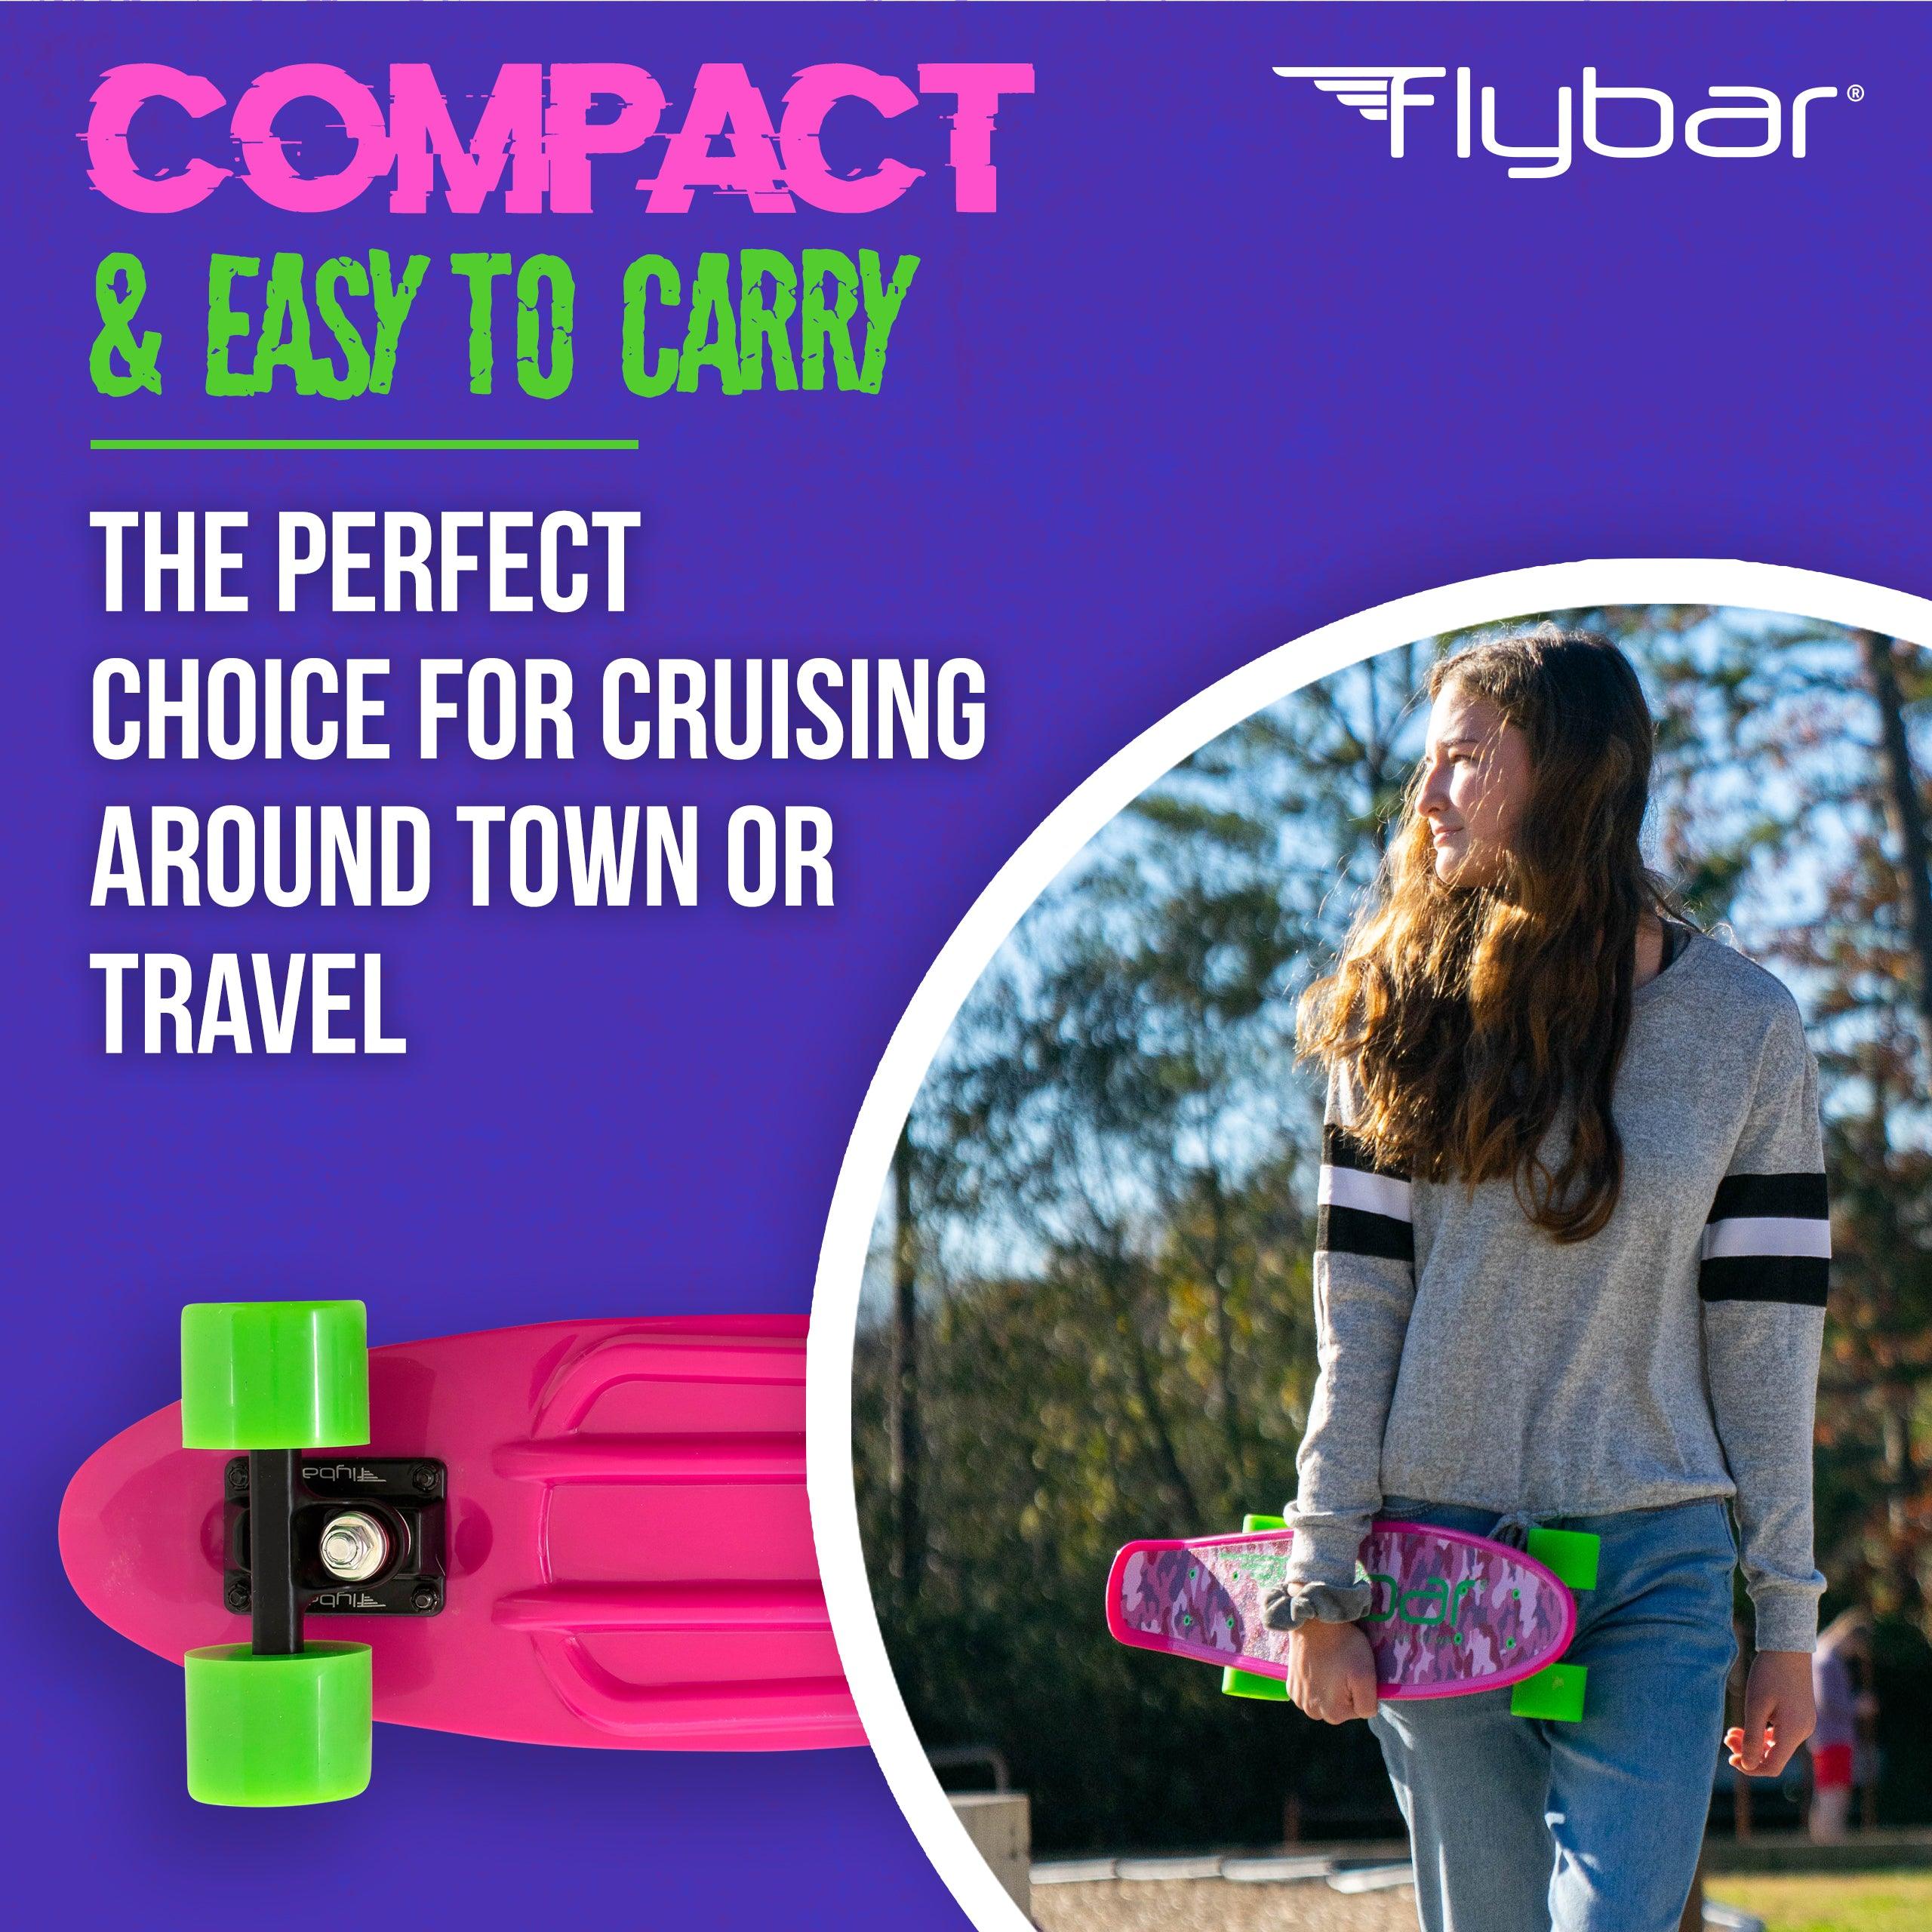 22" Grip Tape Plastic Complete Skateboard - Flybar1